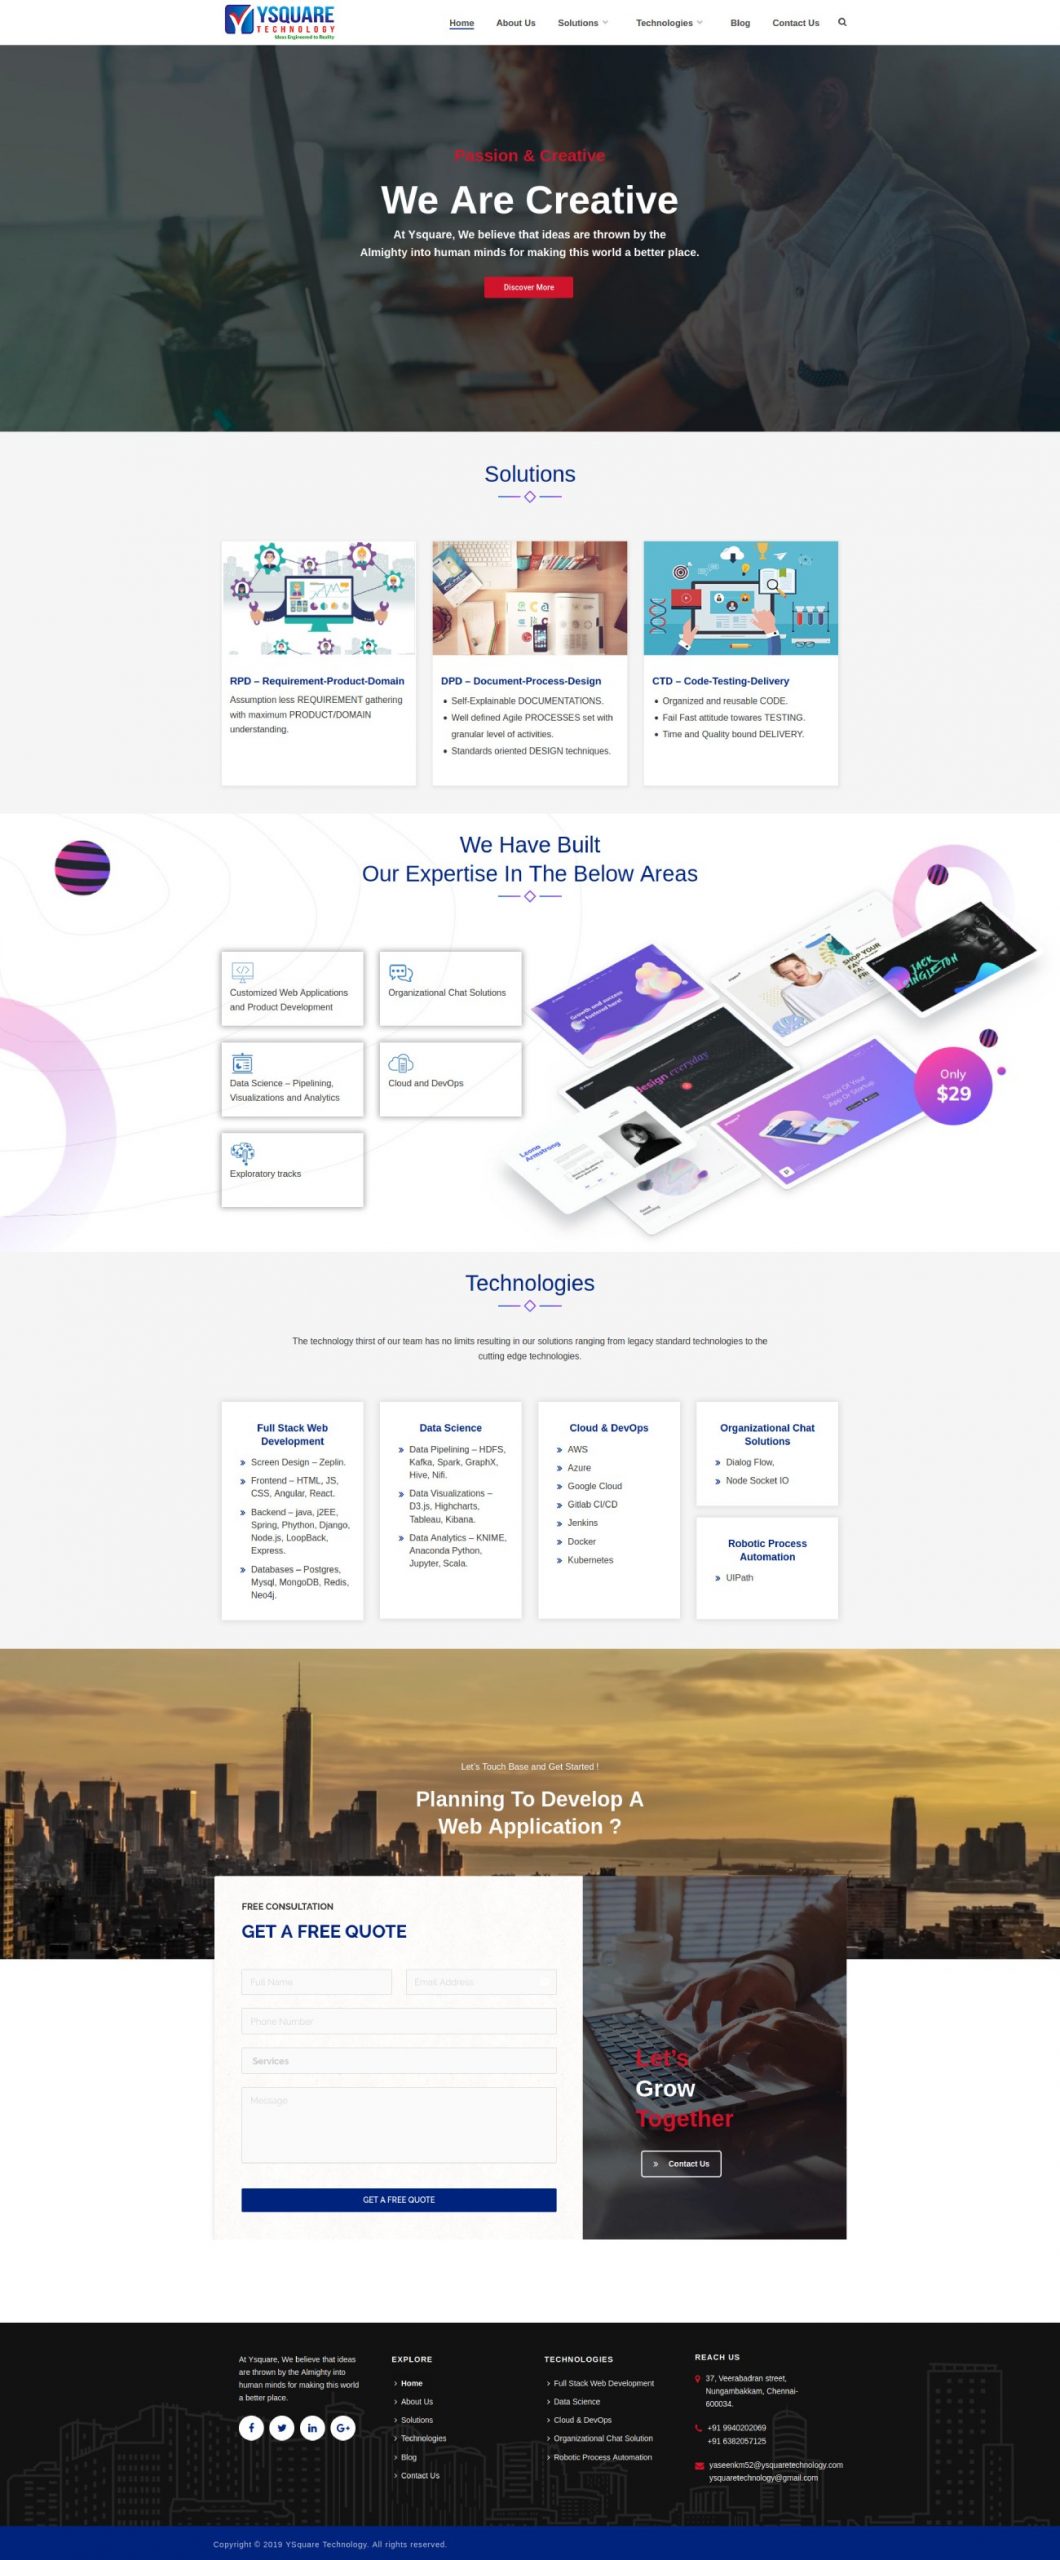 Y Square Technology -homepage - iStudio Technologies